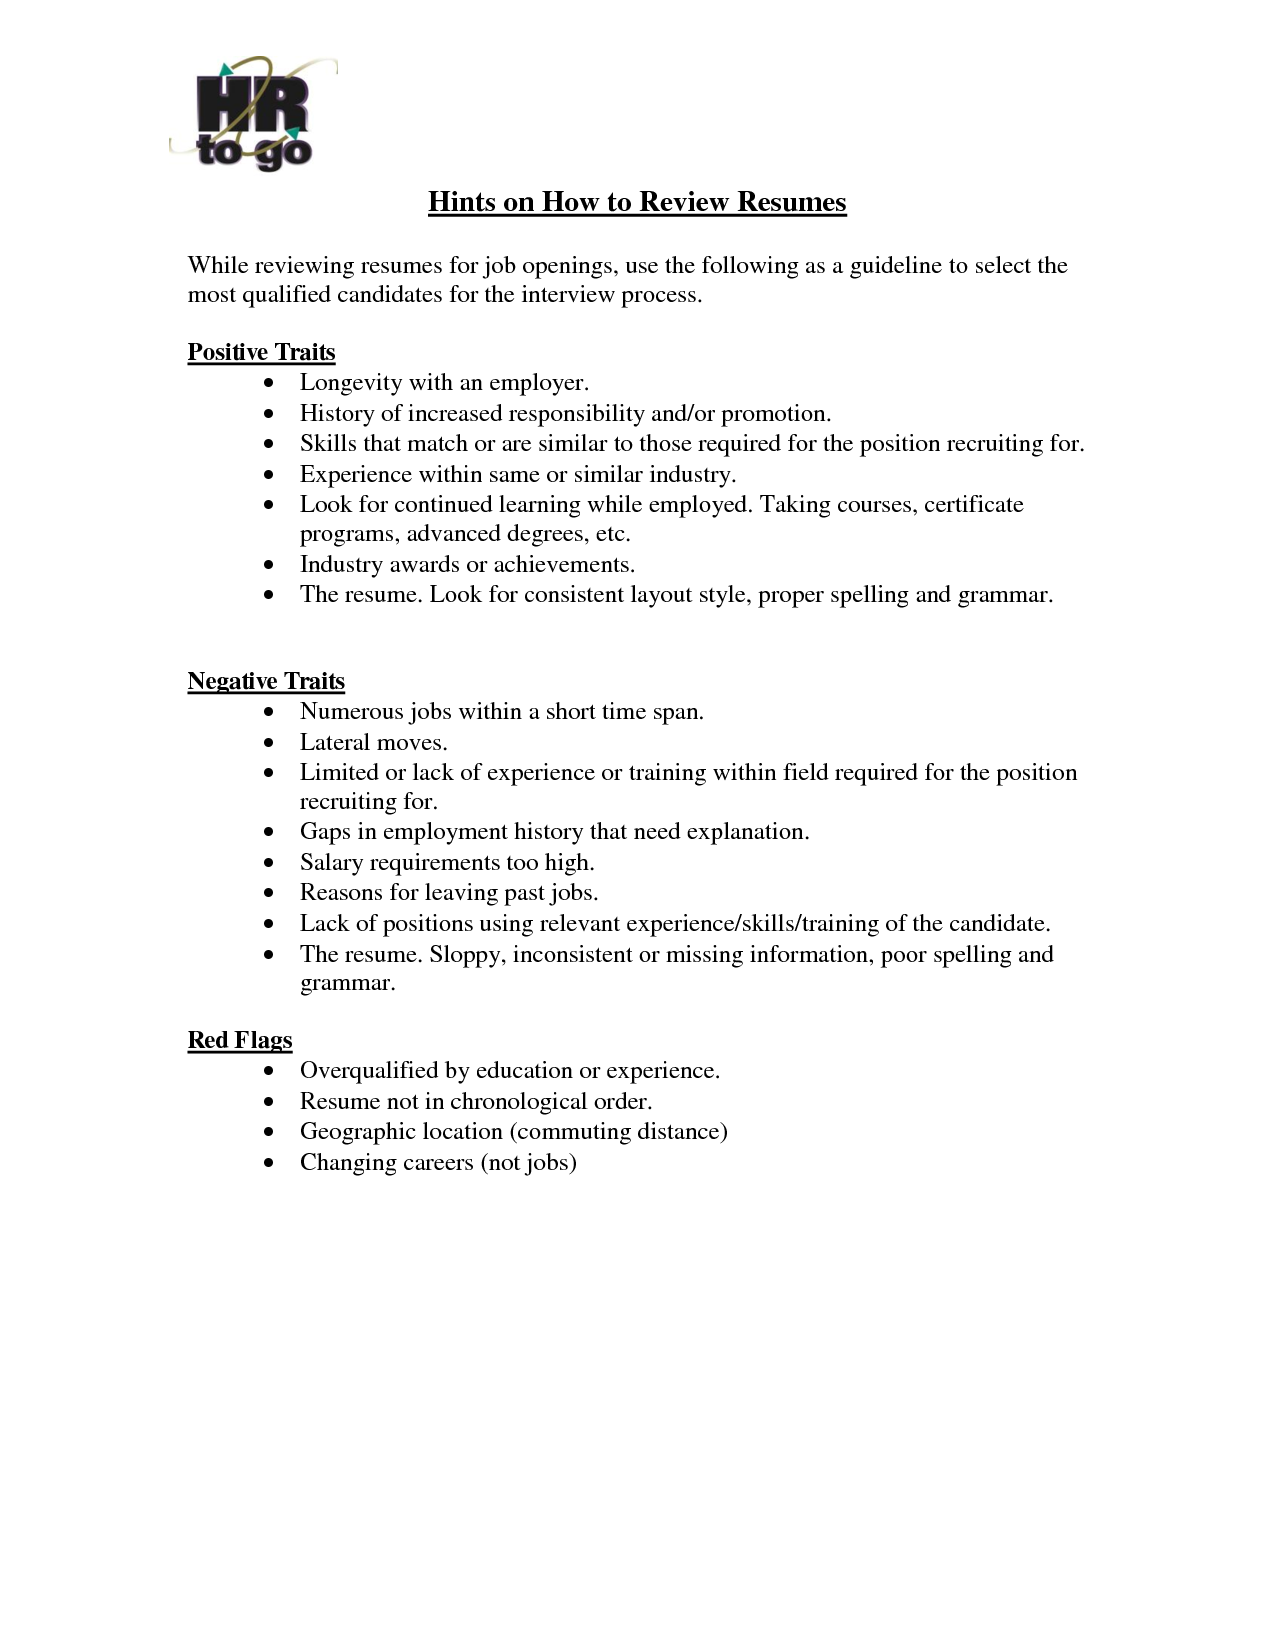 Skills Profile Resume Examples Image